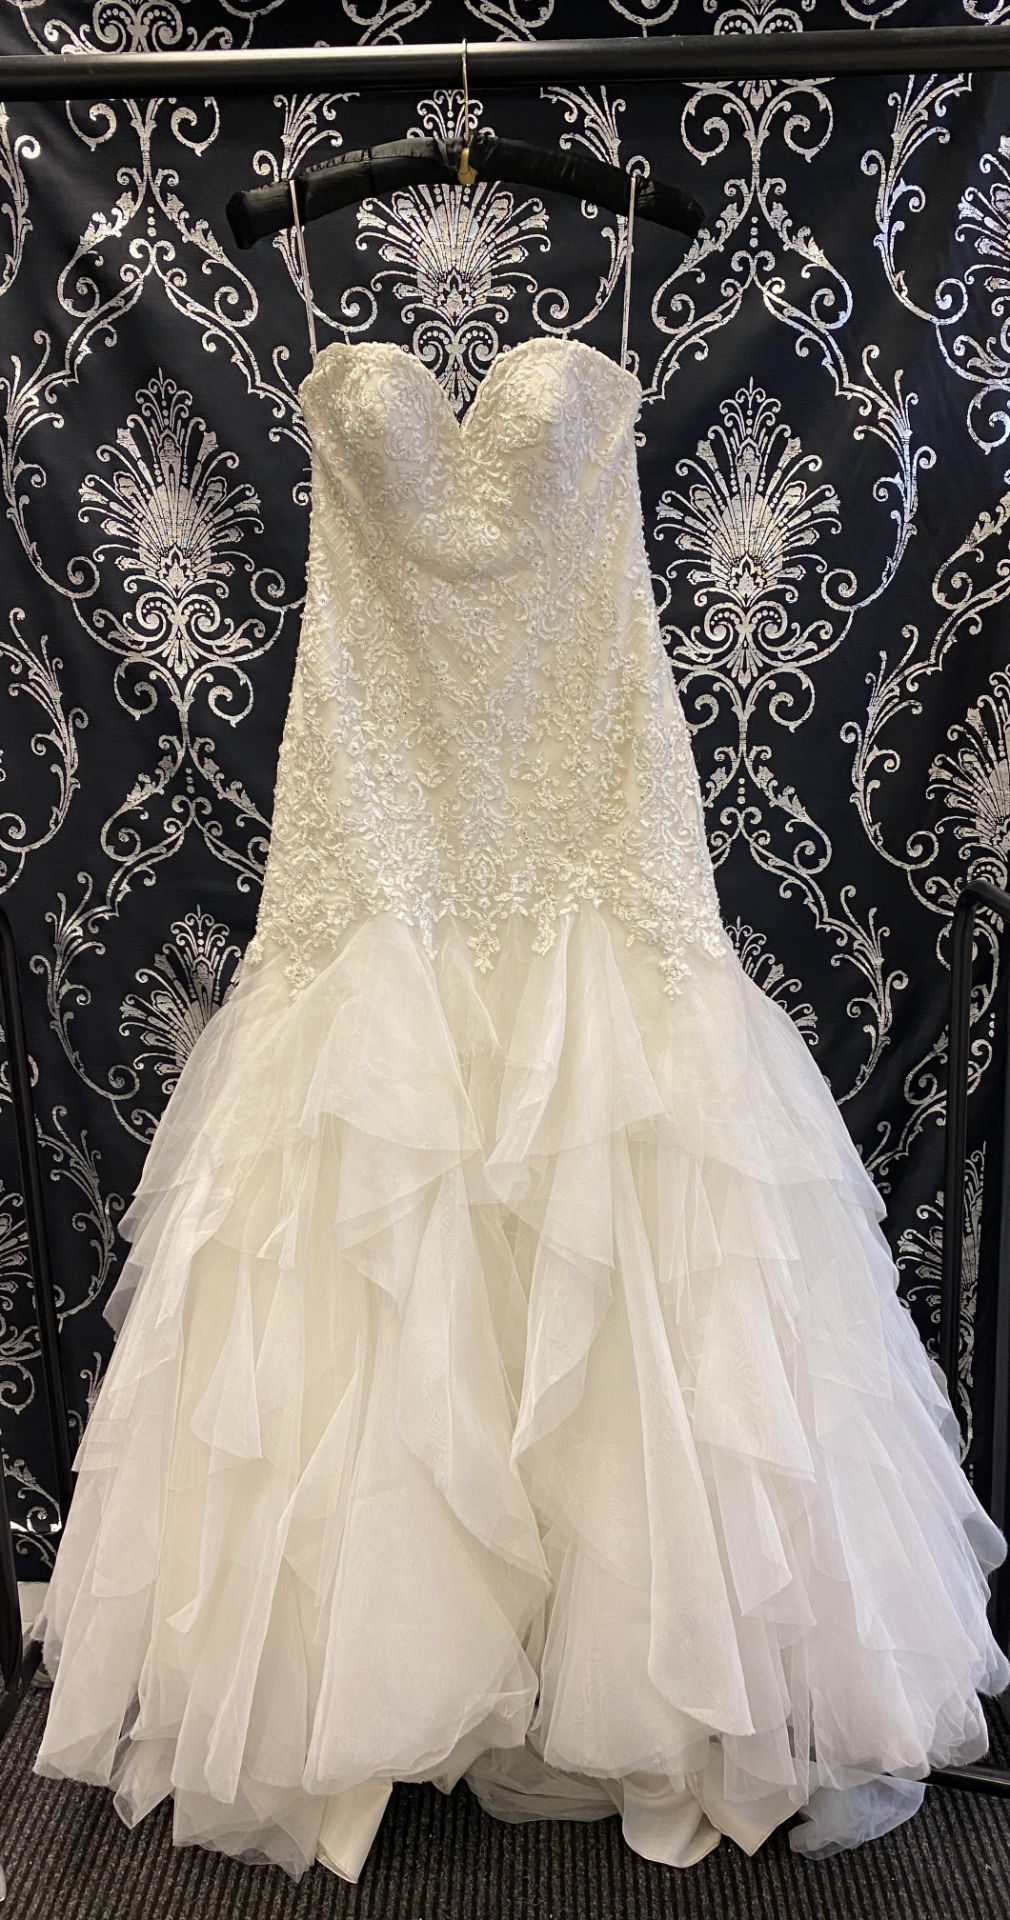 1 x REBECCA INGRAM 'Millicent' Strapless Mermaid Designer Wedding Dress RRP £1,200 UK12 - Image 6 of 10